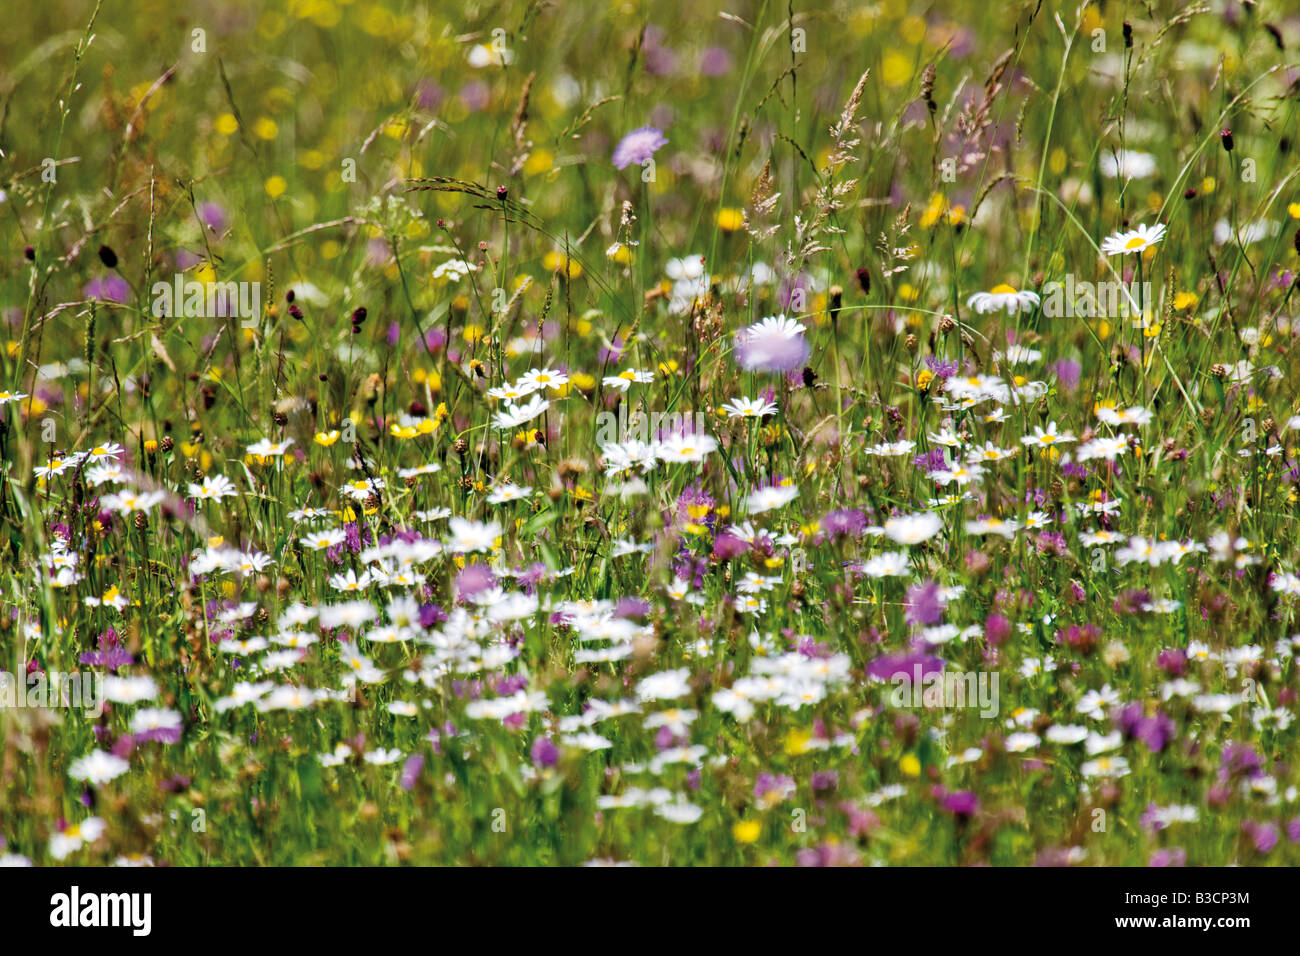 Germany, Bavaria, Wild flowers in field, full frame Stock Photo